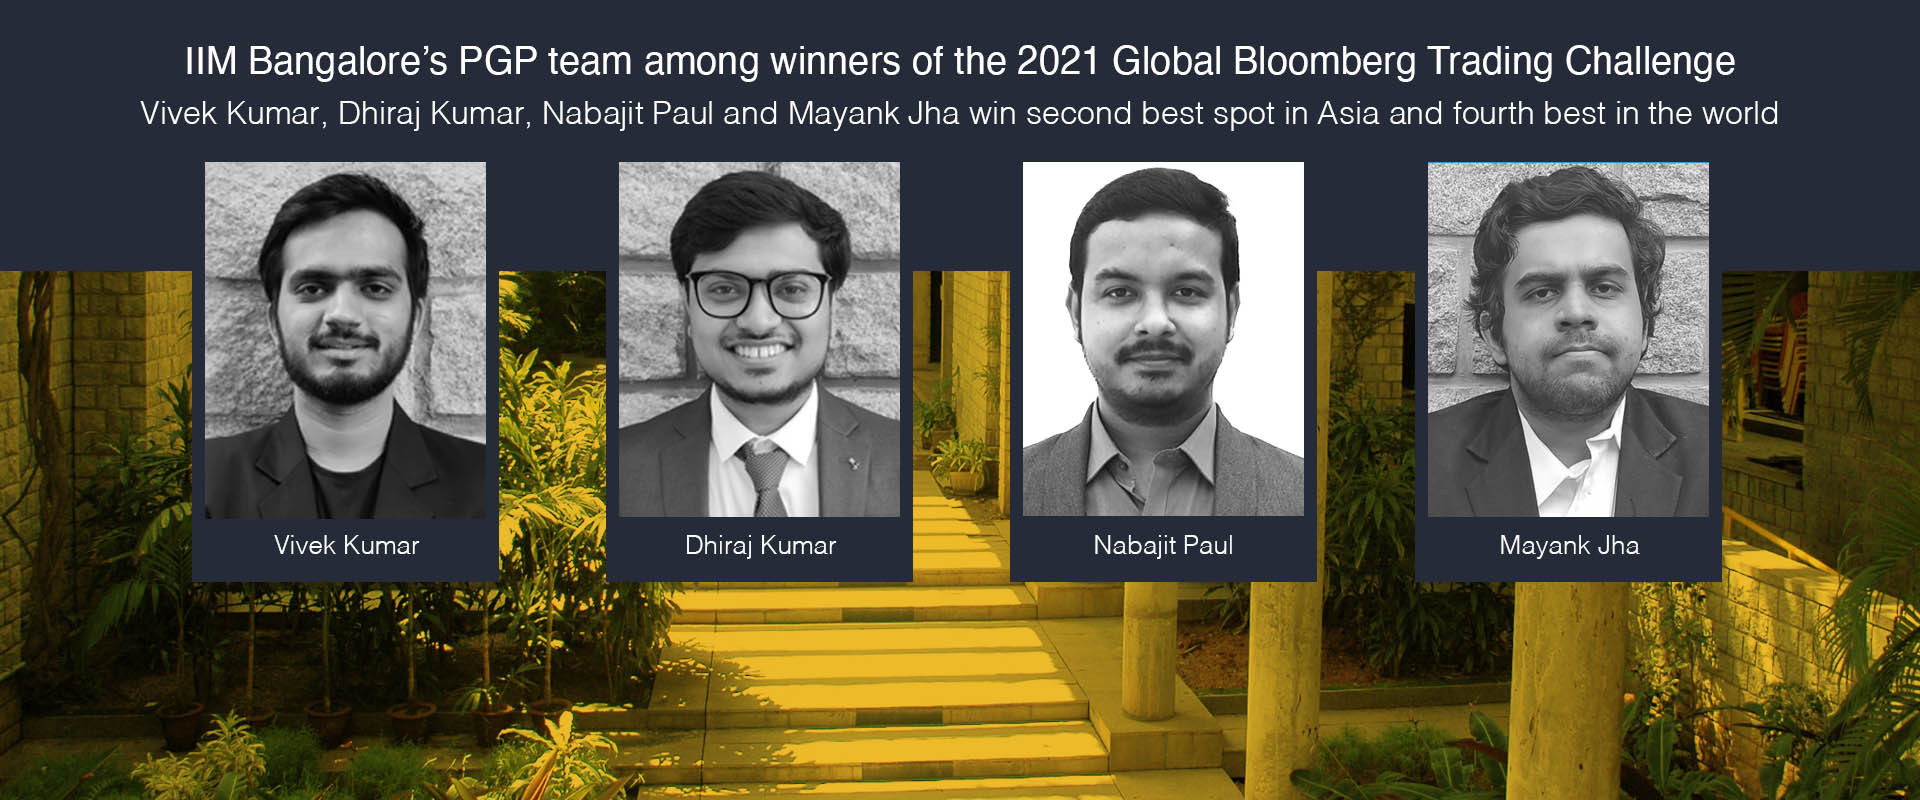 IIM Bangalore’s PGP team among winners of the 2021 Global Bloomberg Trading Challenge